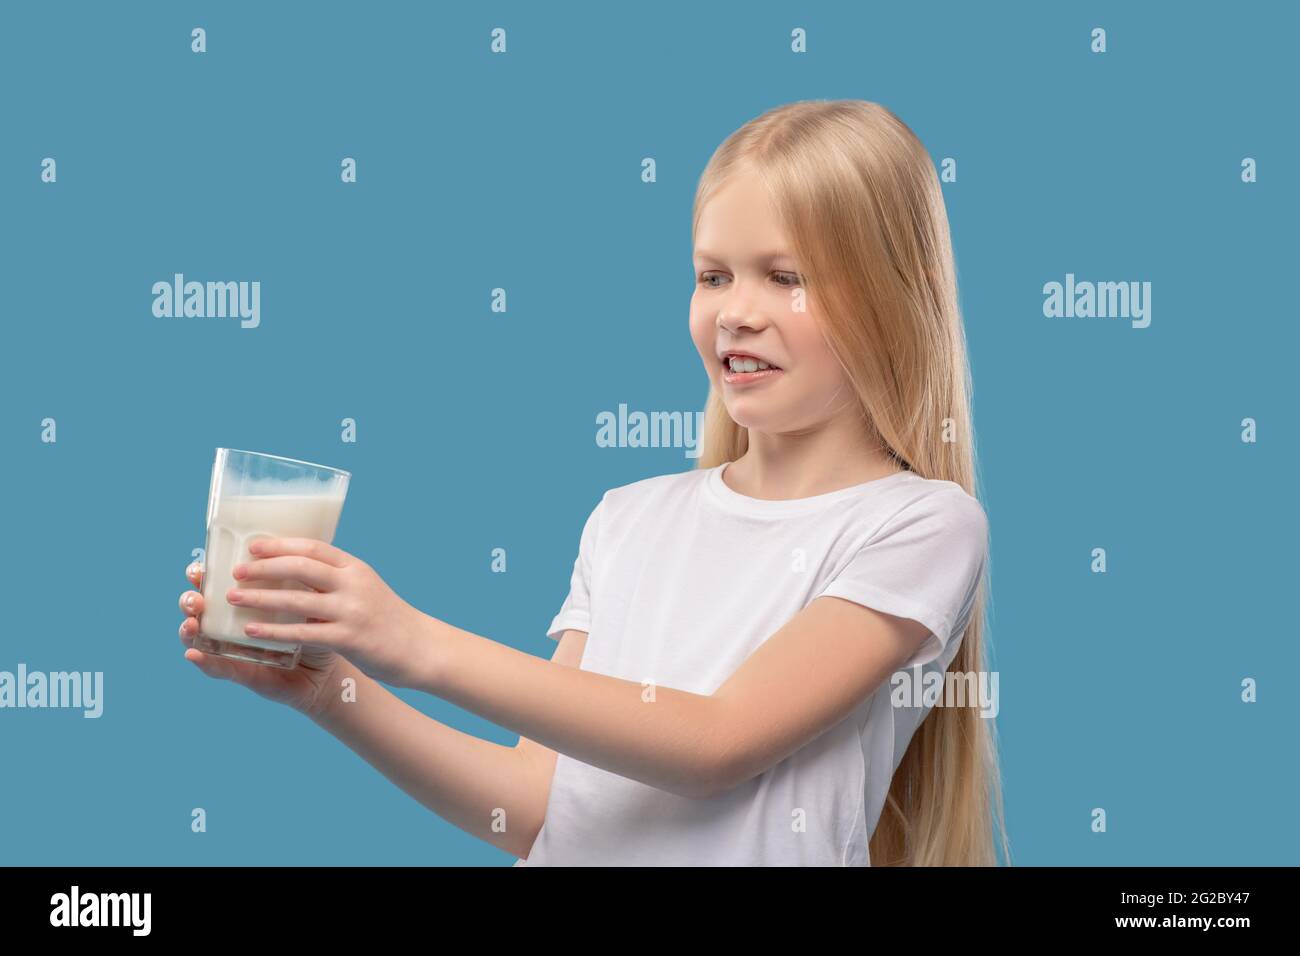 Displeased girl pushing away glass of milk Stock Photo